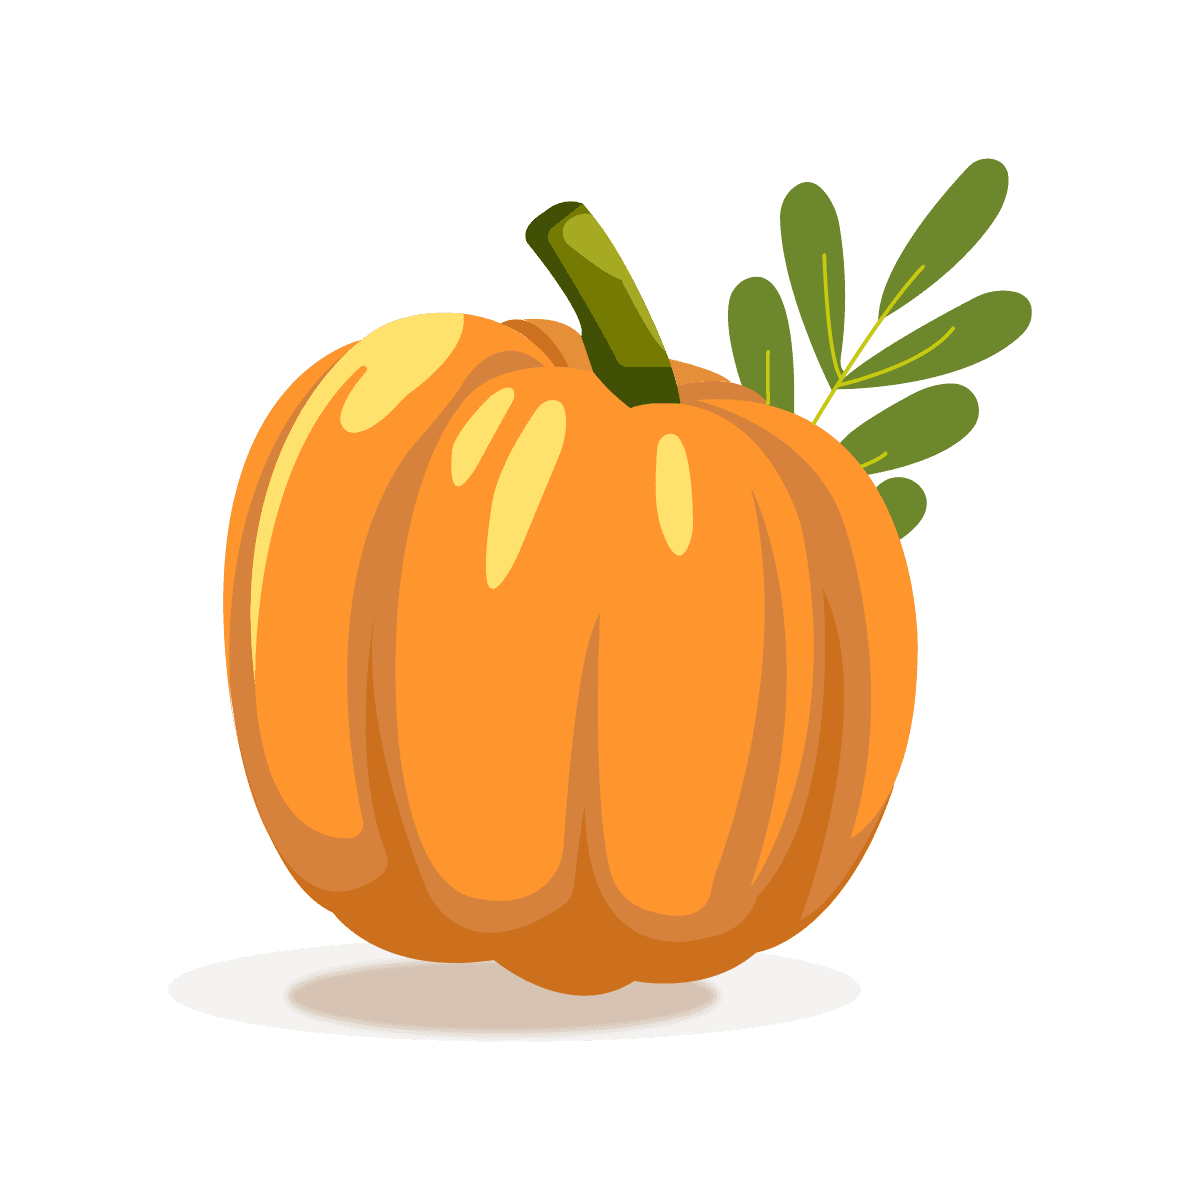 autumn harvest bounty colorful cartoon pumpkin and pear